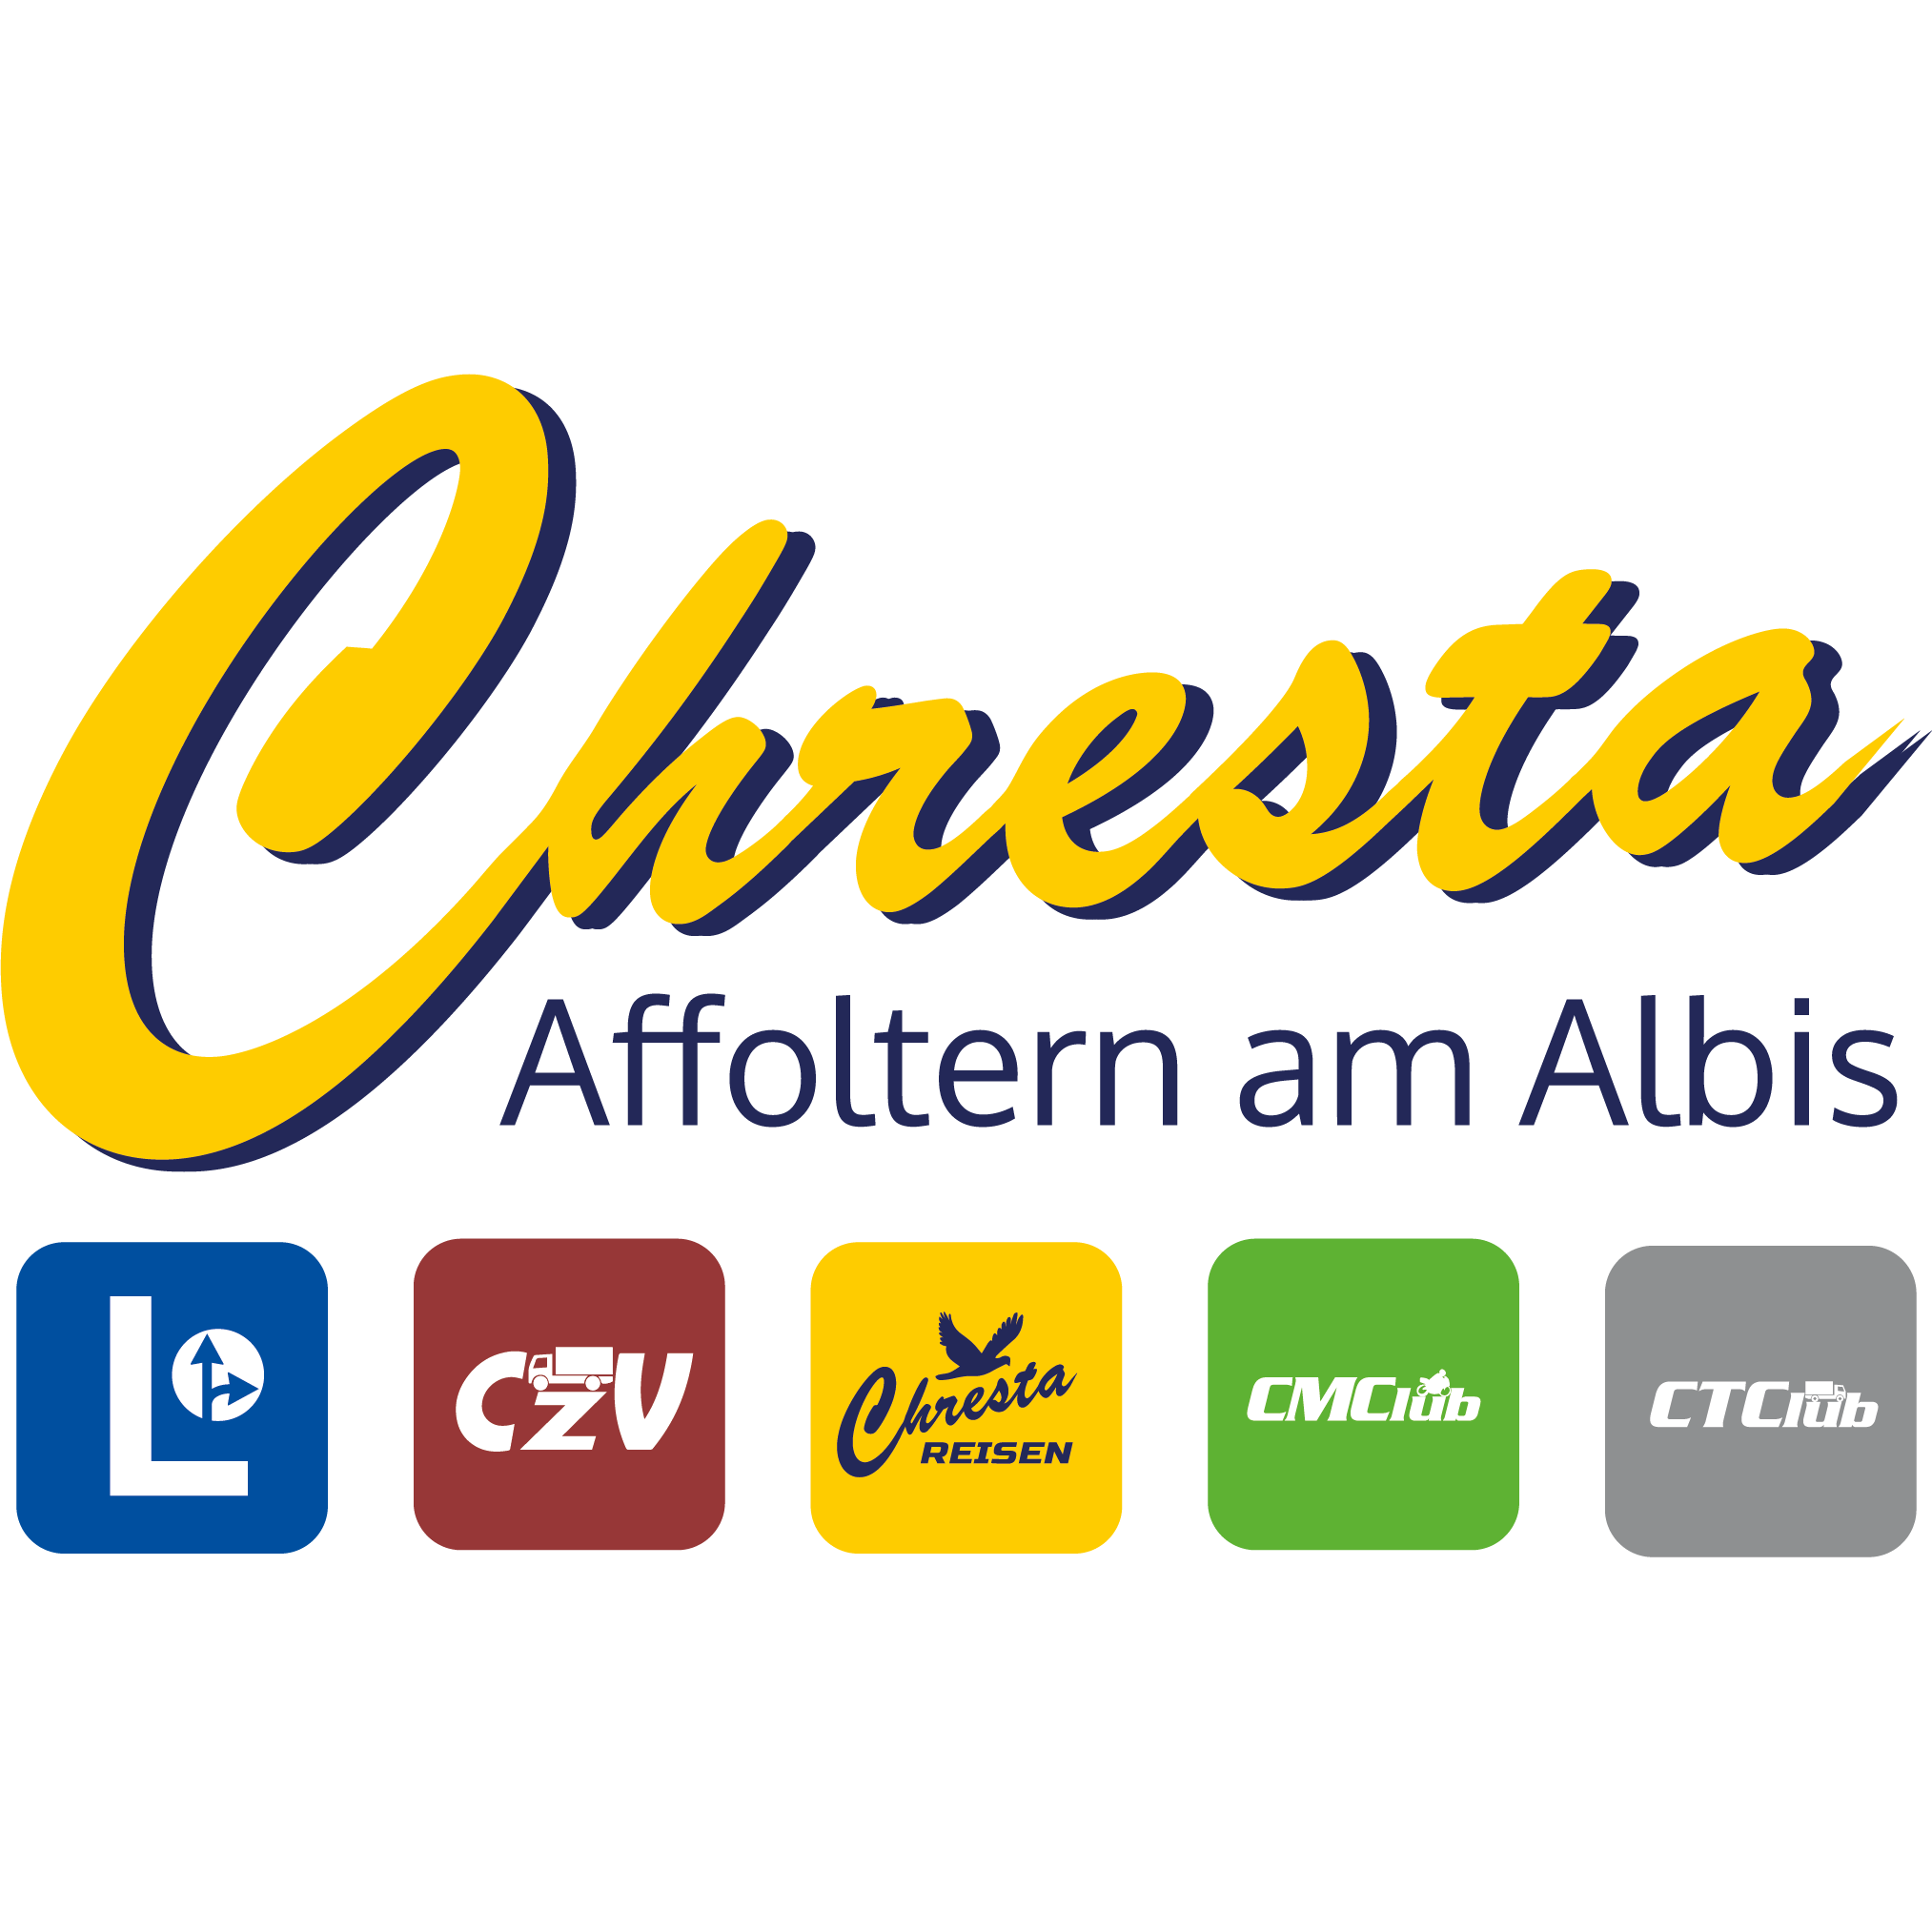 Fahrschule Chresta GmbH Logo